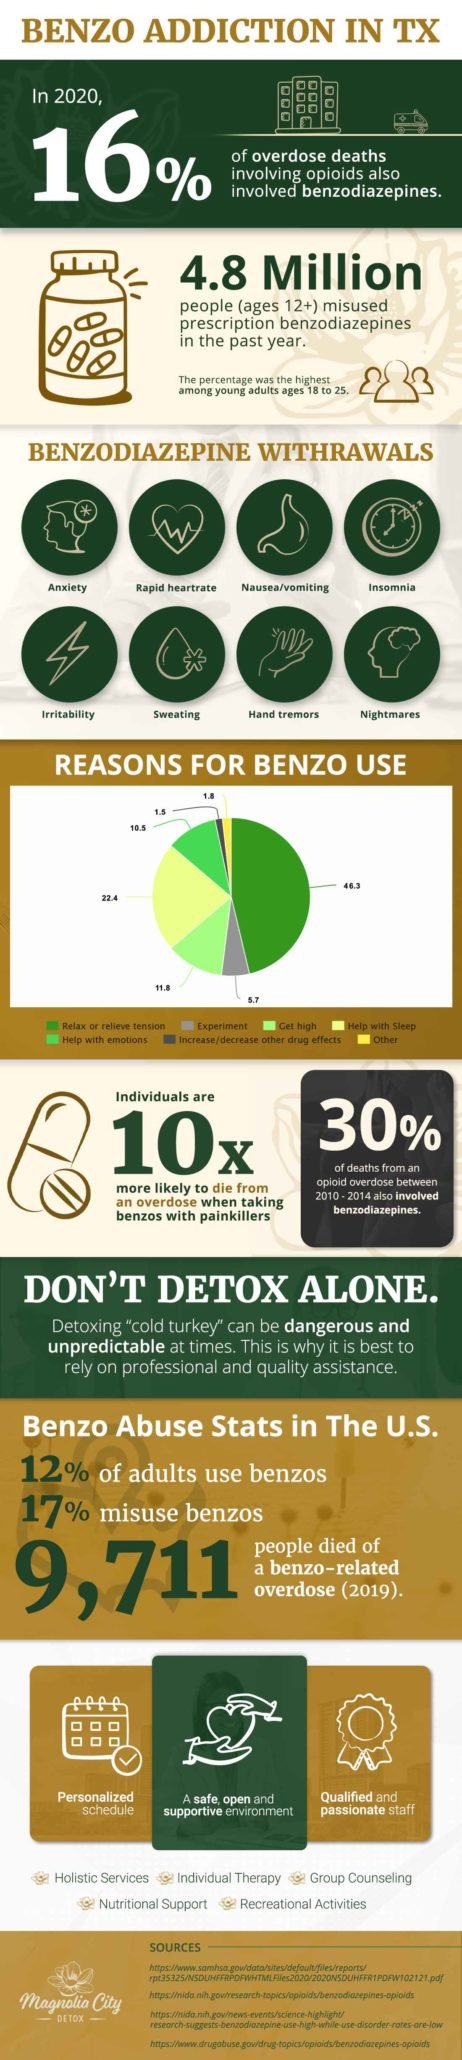 Benzodiazepine Abuse Statistics